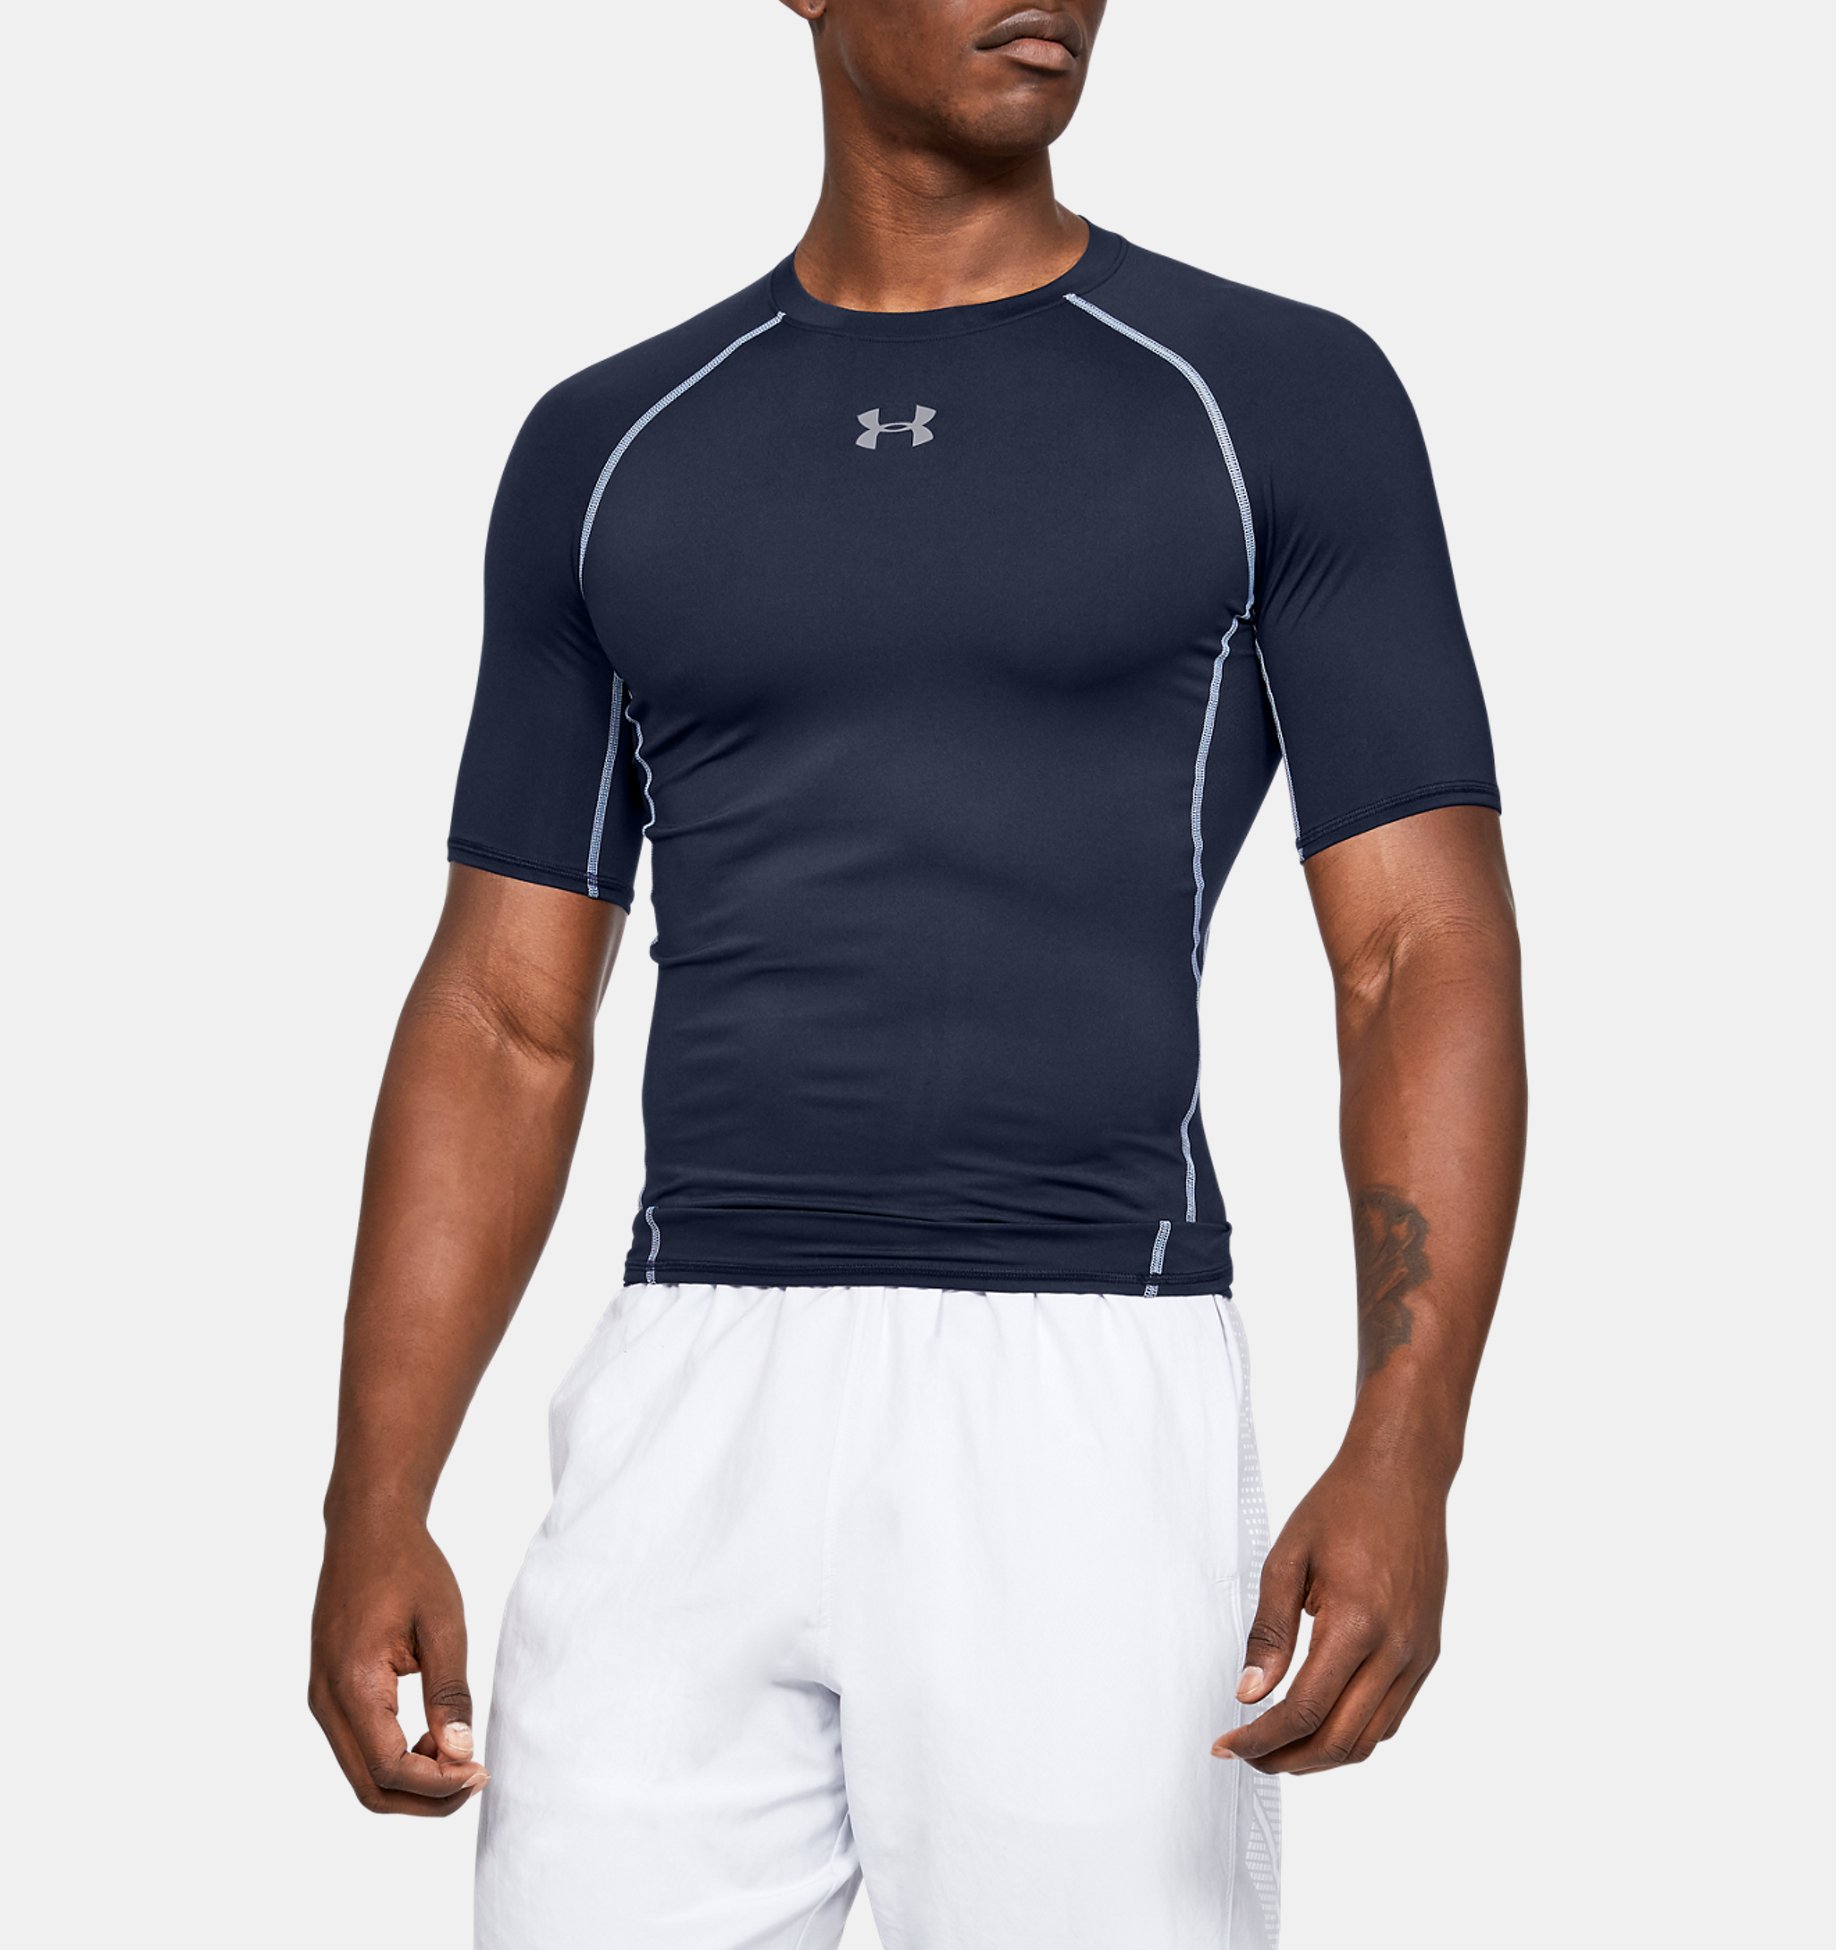 Marathon Red New Under Armour UA Men's HeatGear Compression Short Sleeve Shirt 